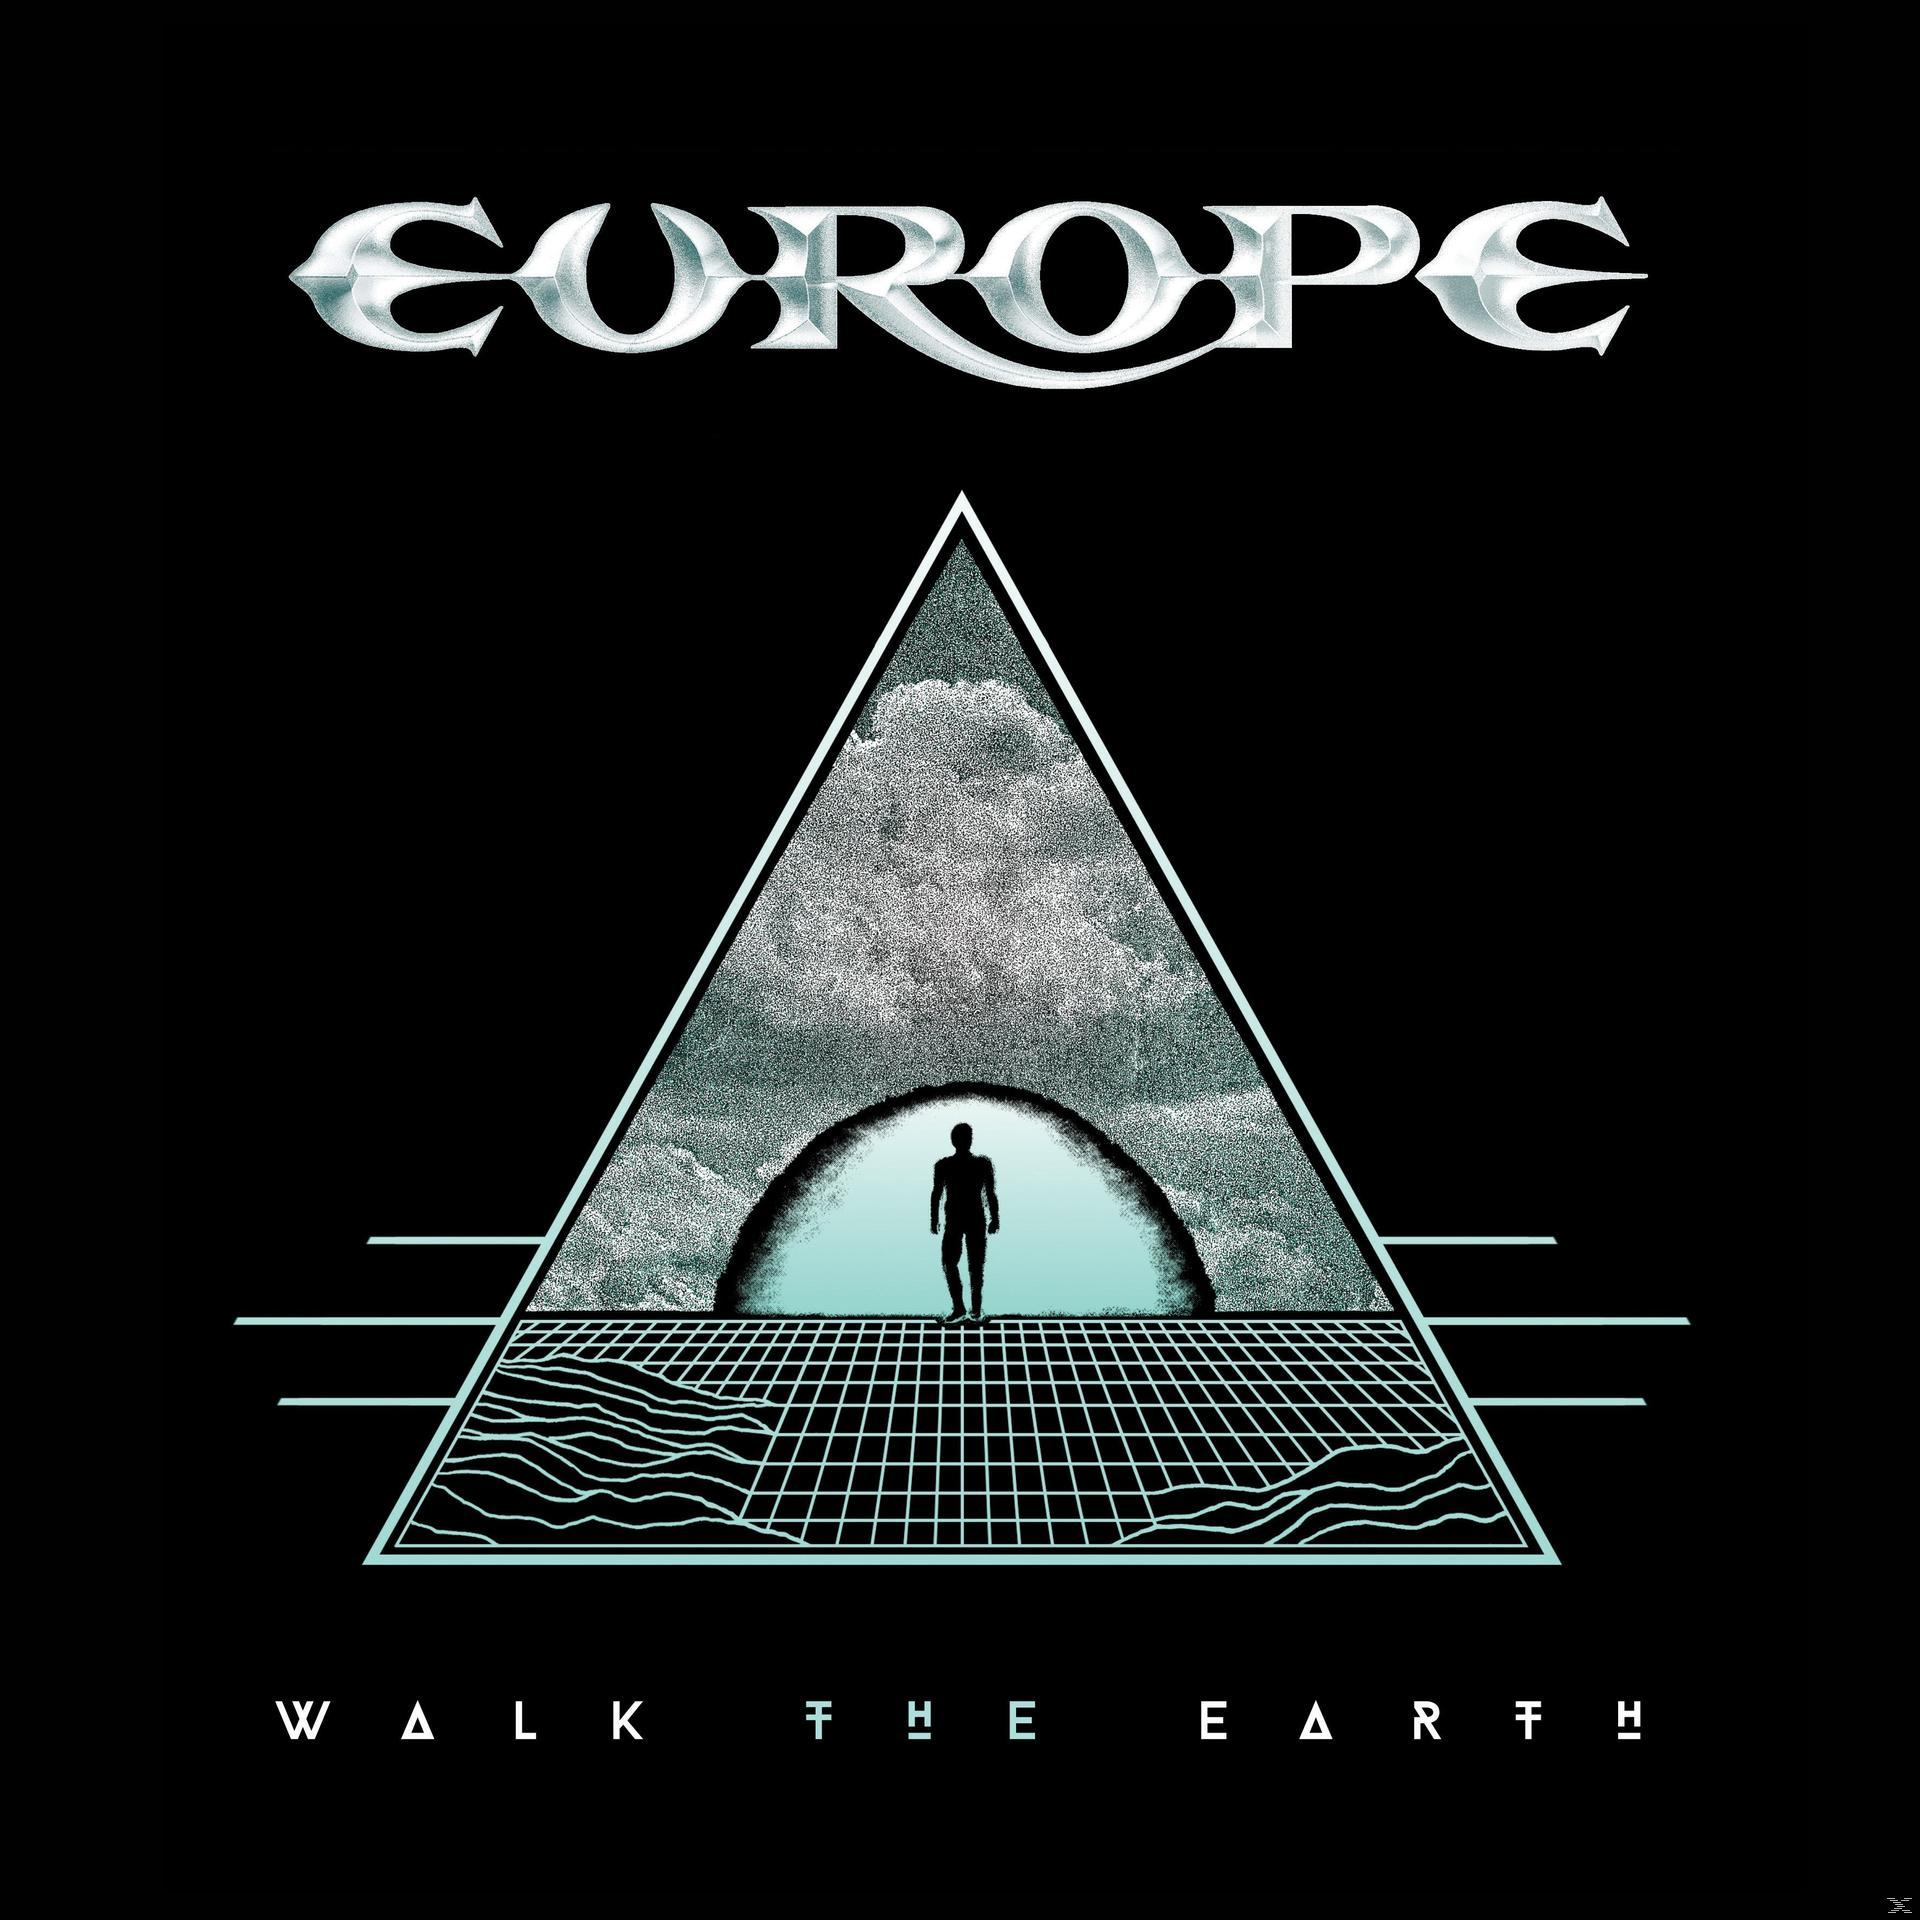 - Earth (Vinyl) - Europe Walk The